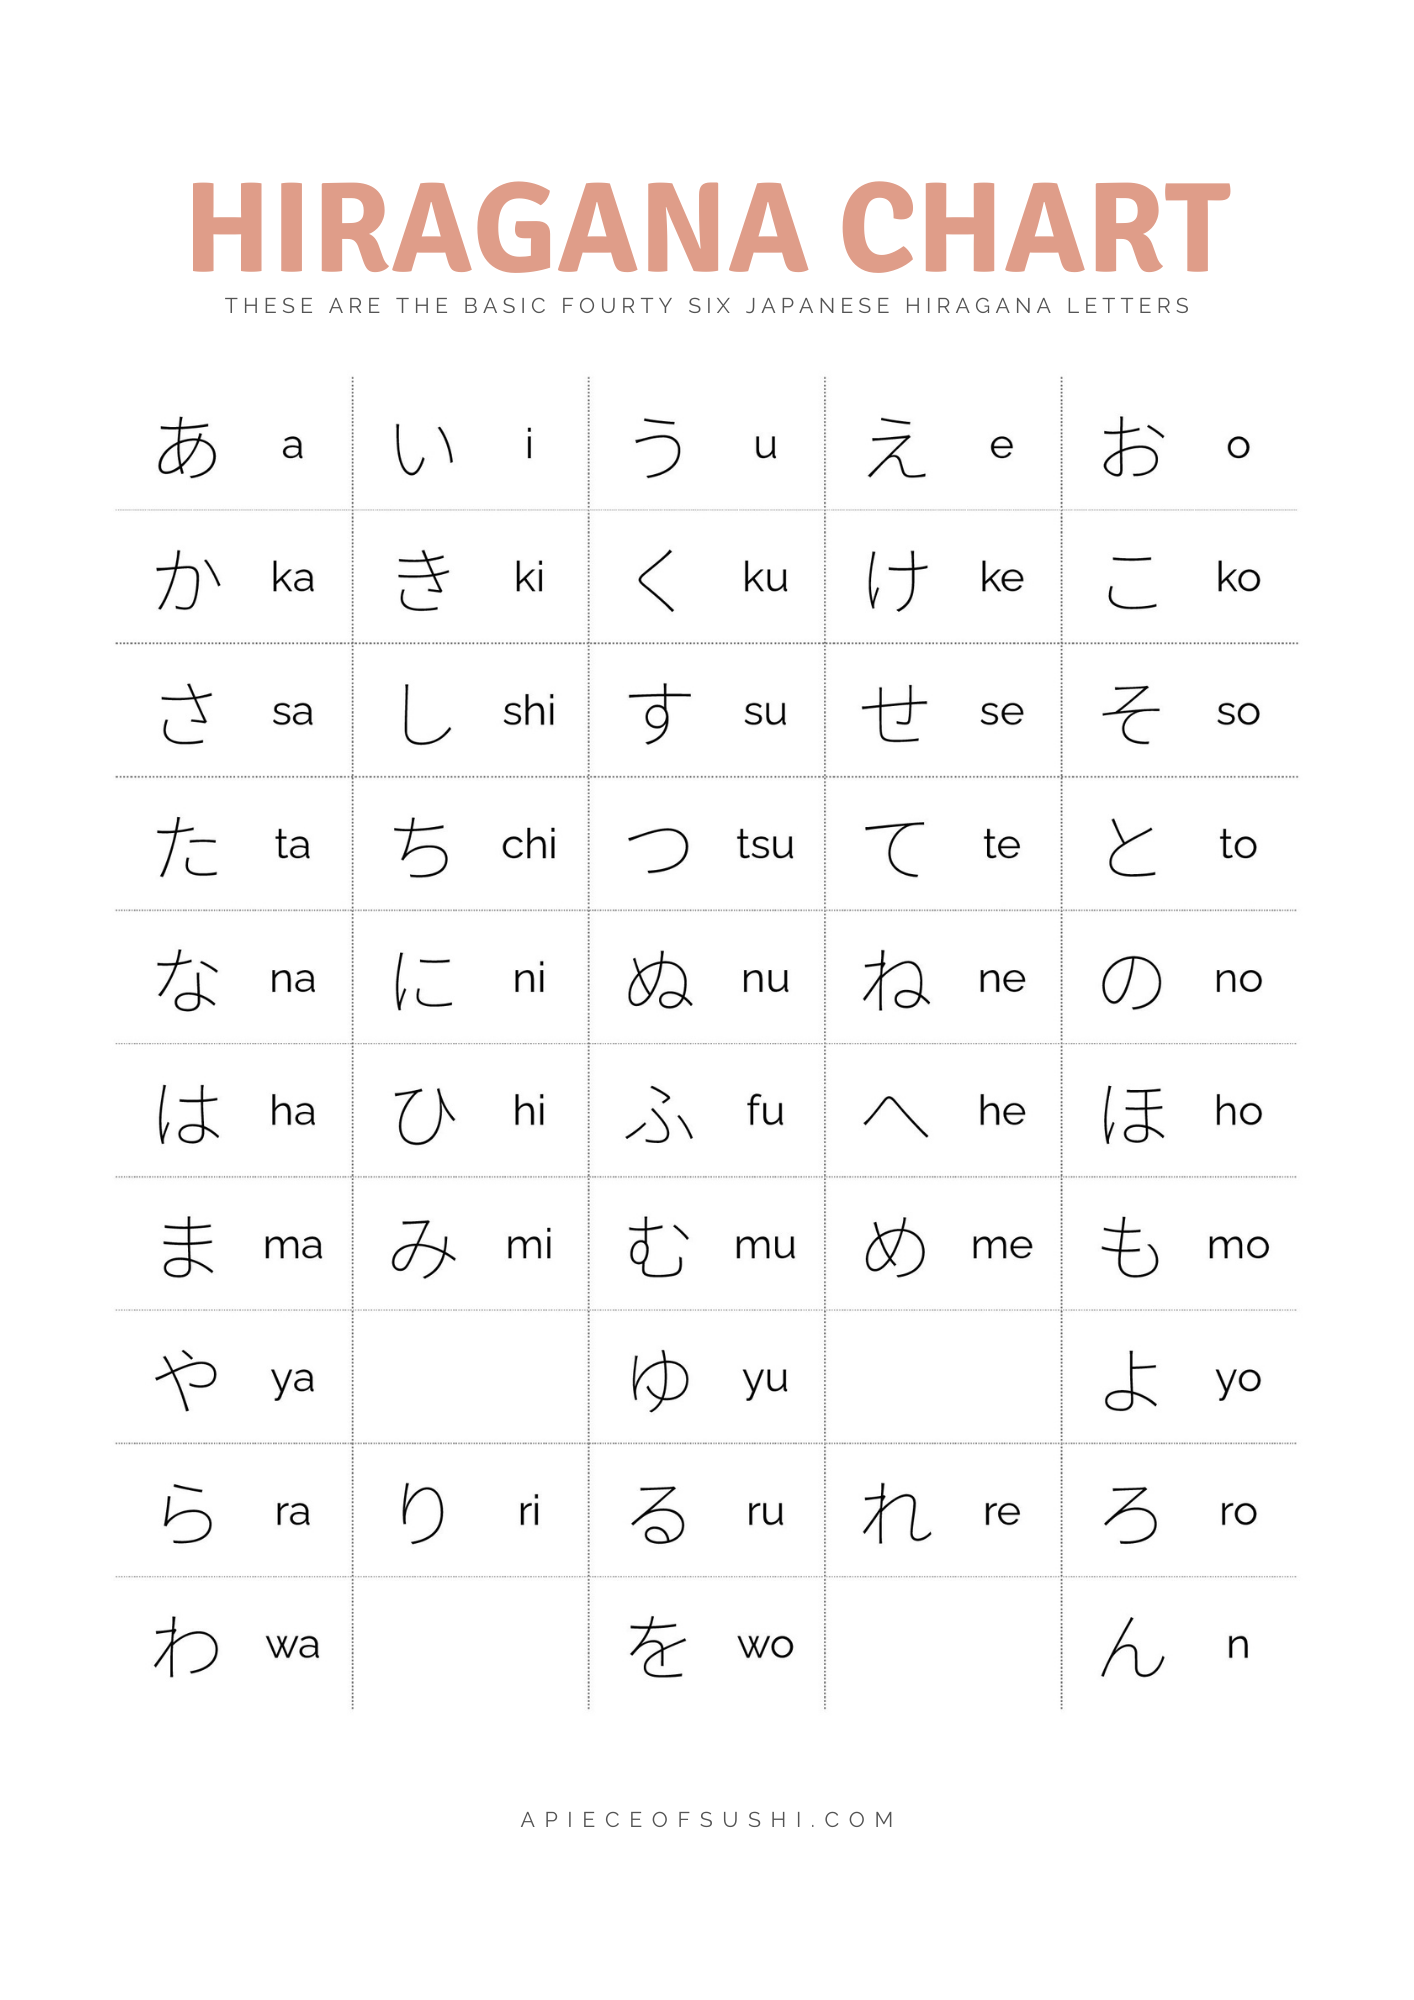 carta hiragana japonesa